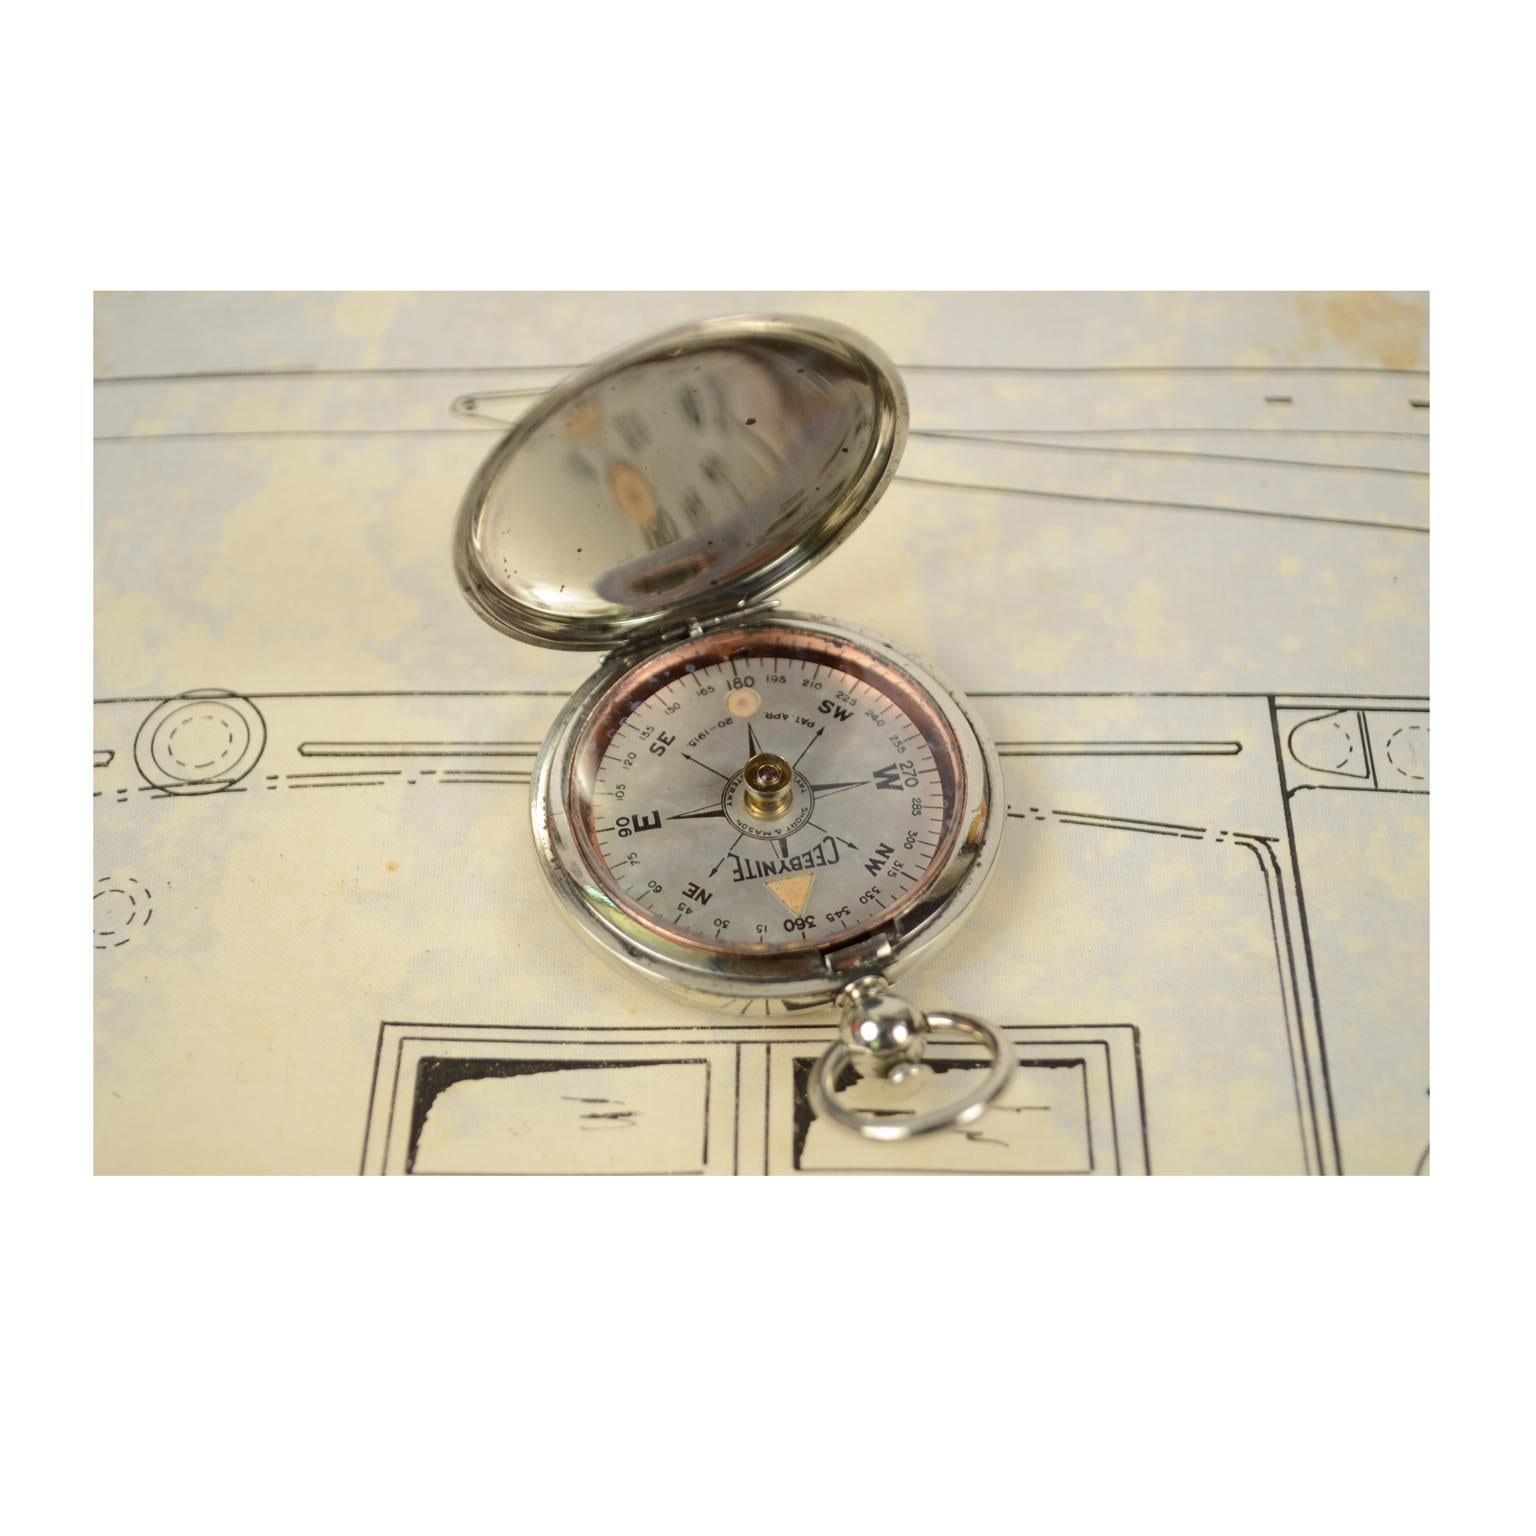 w ottway london 1915 compass